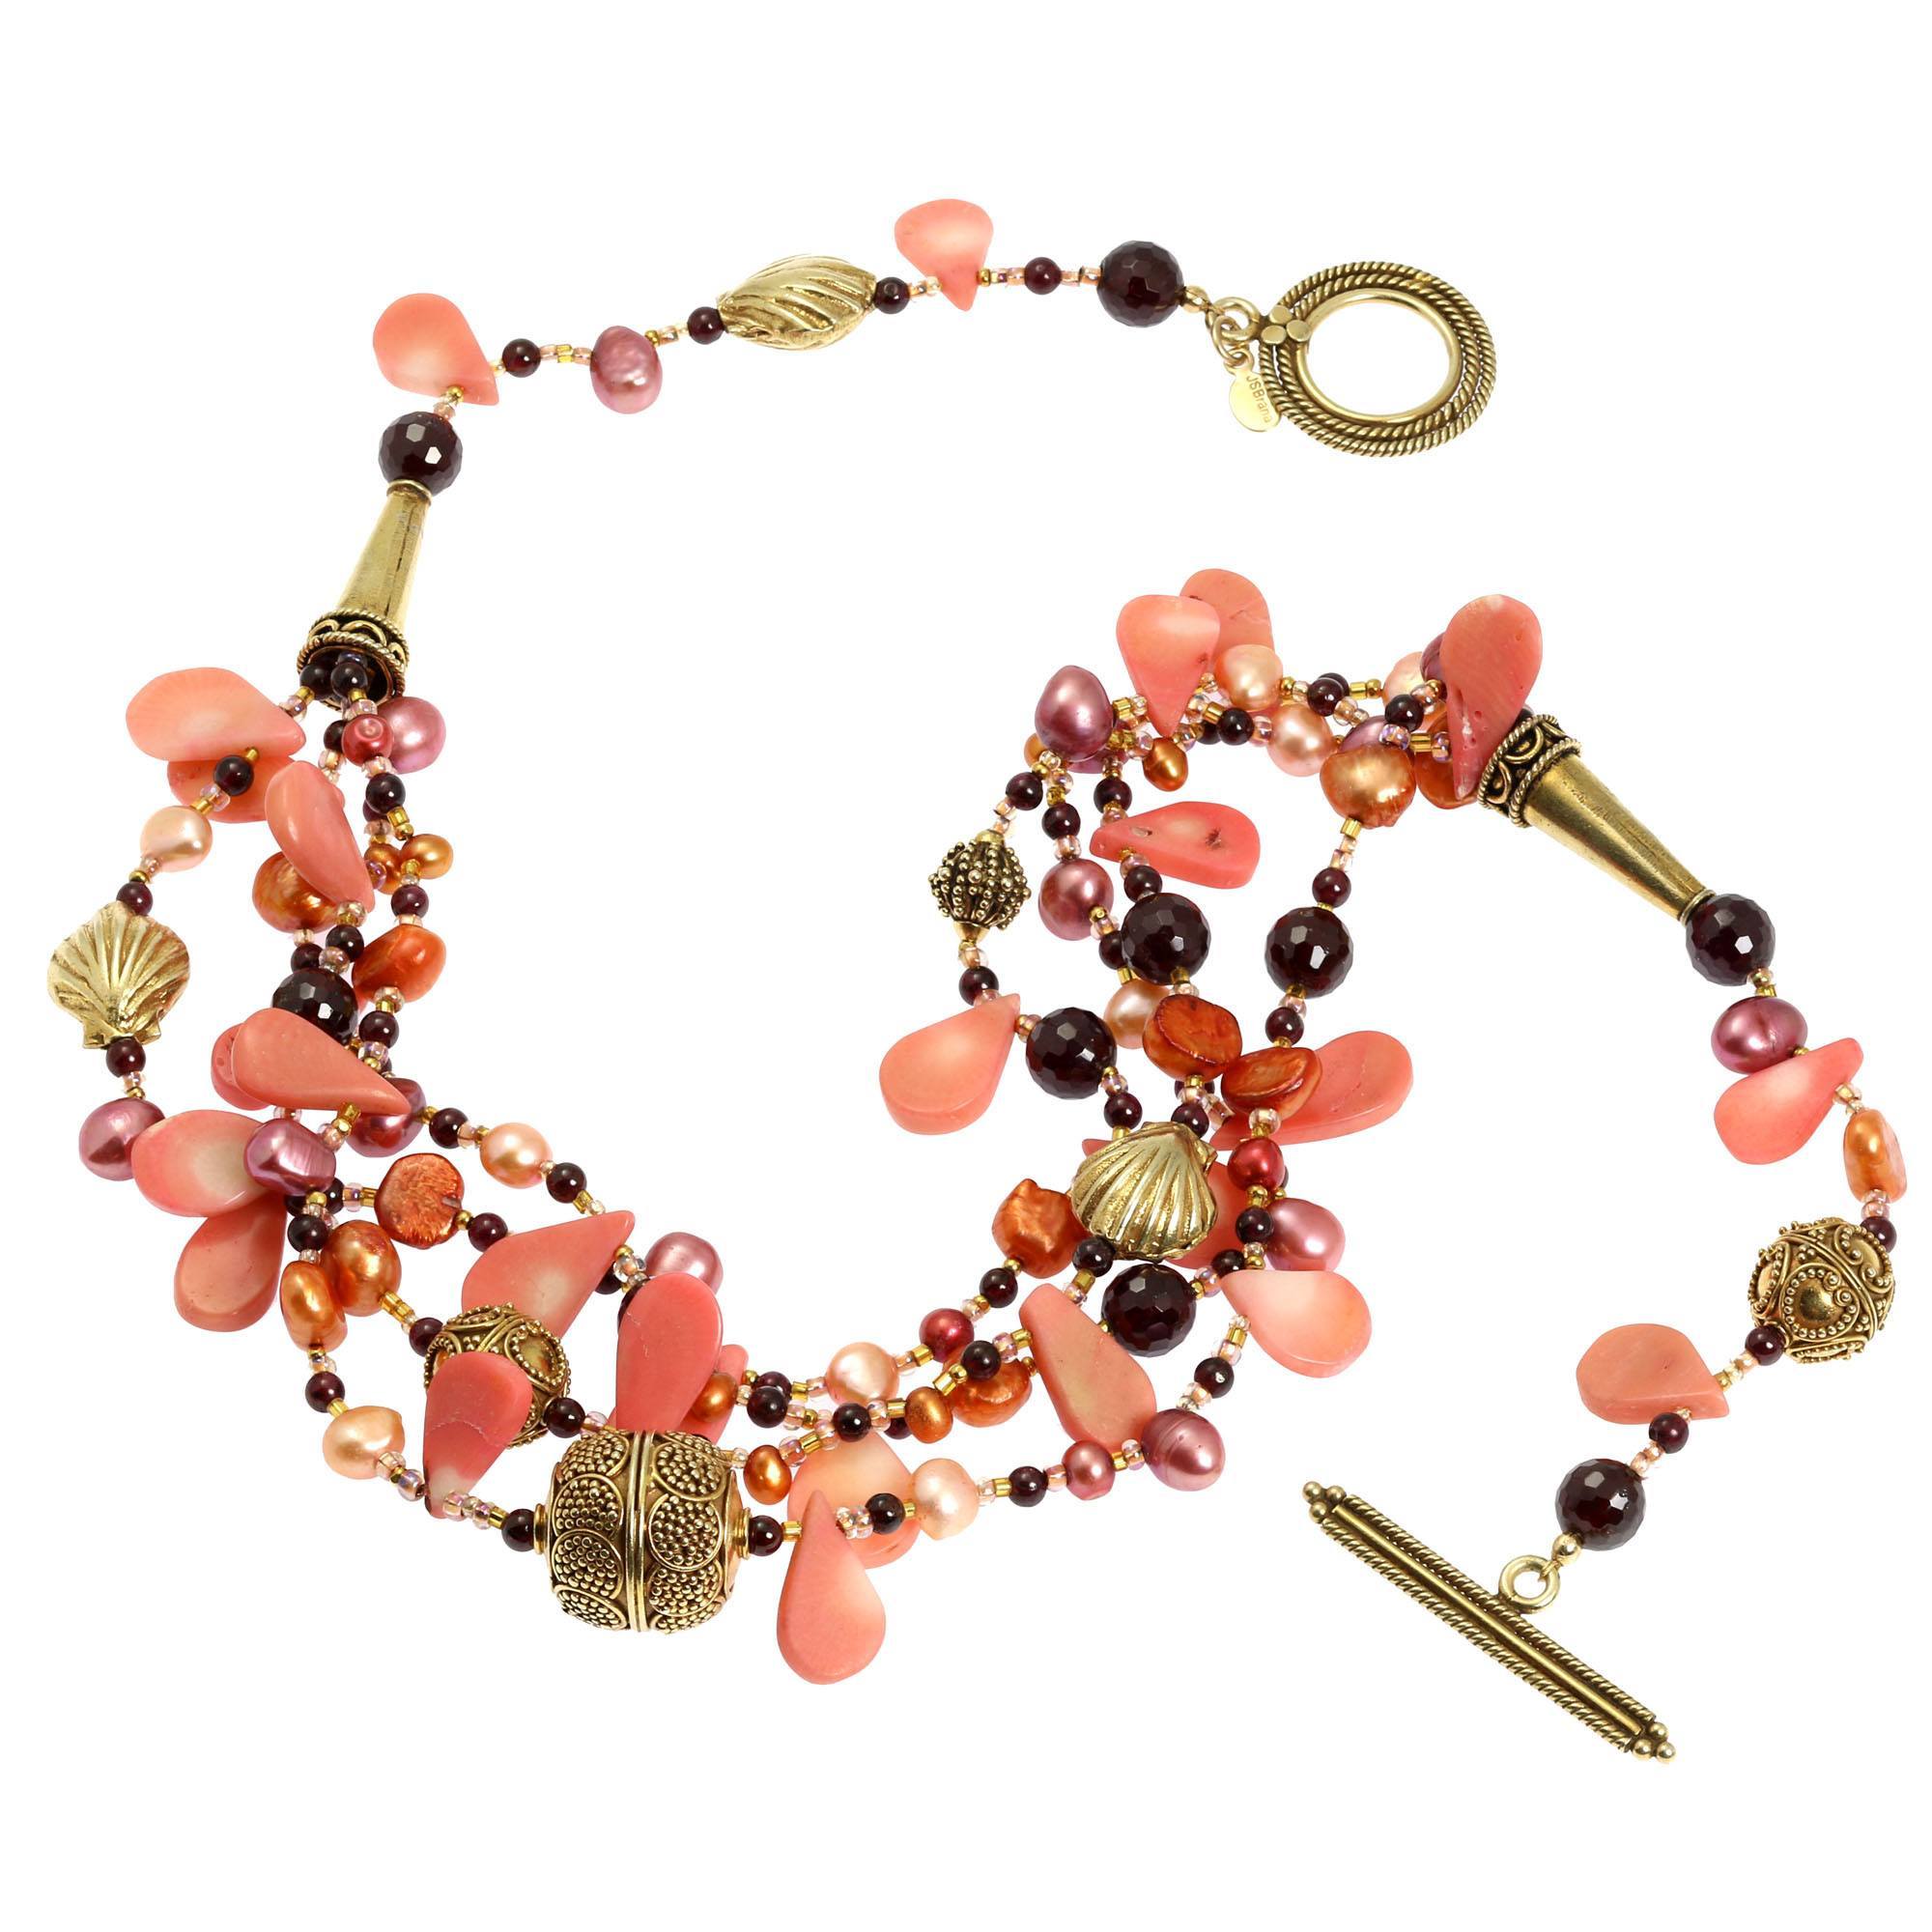 Detail of Pink Coral Garnet Beaded Gemstone Necklace